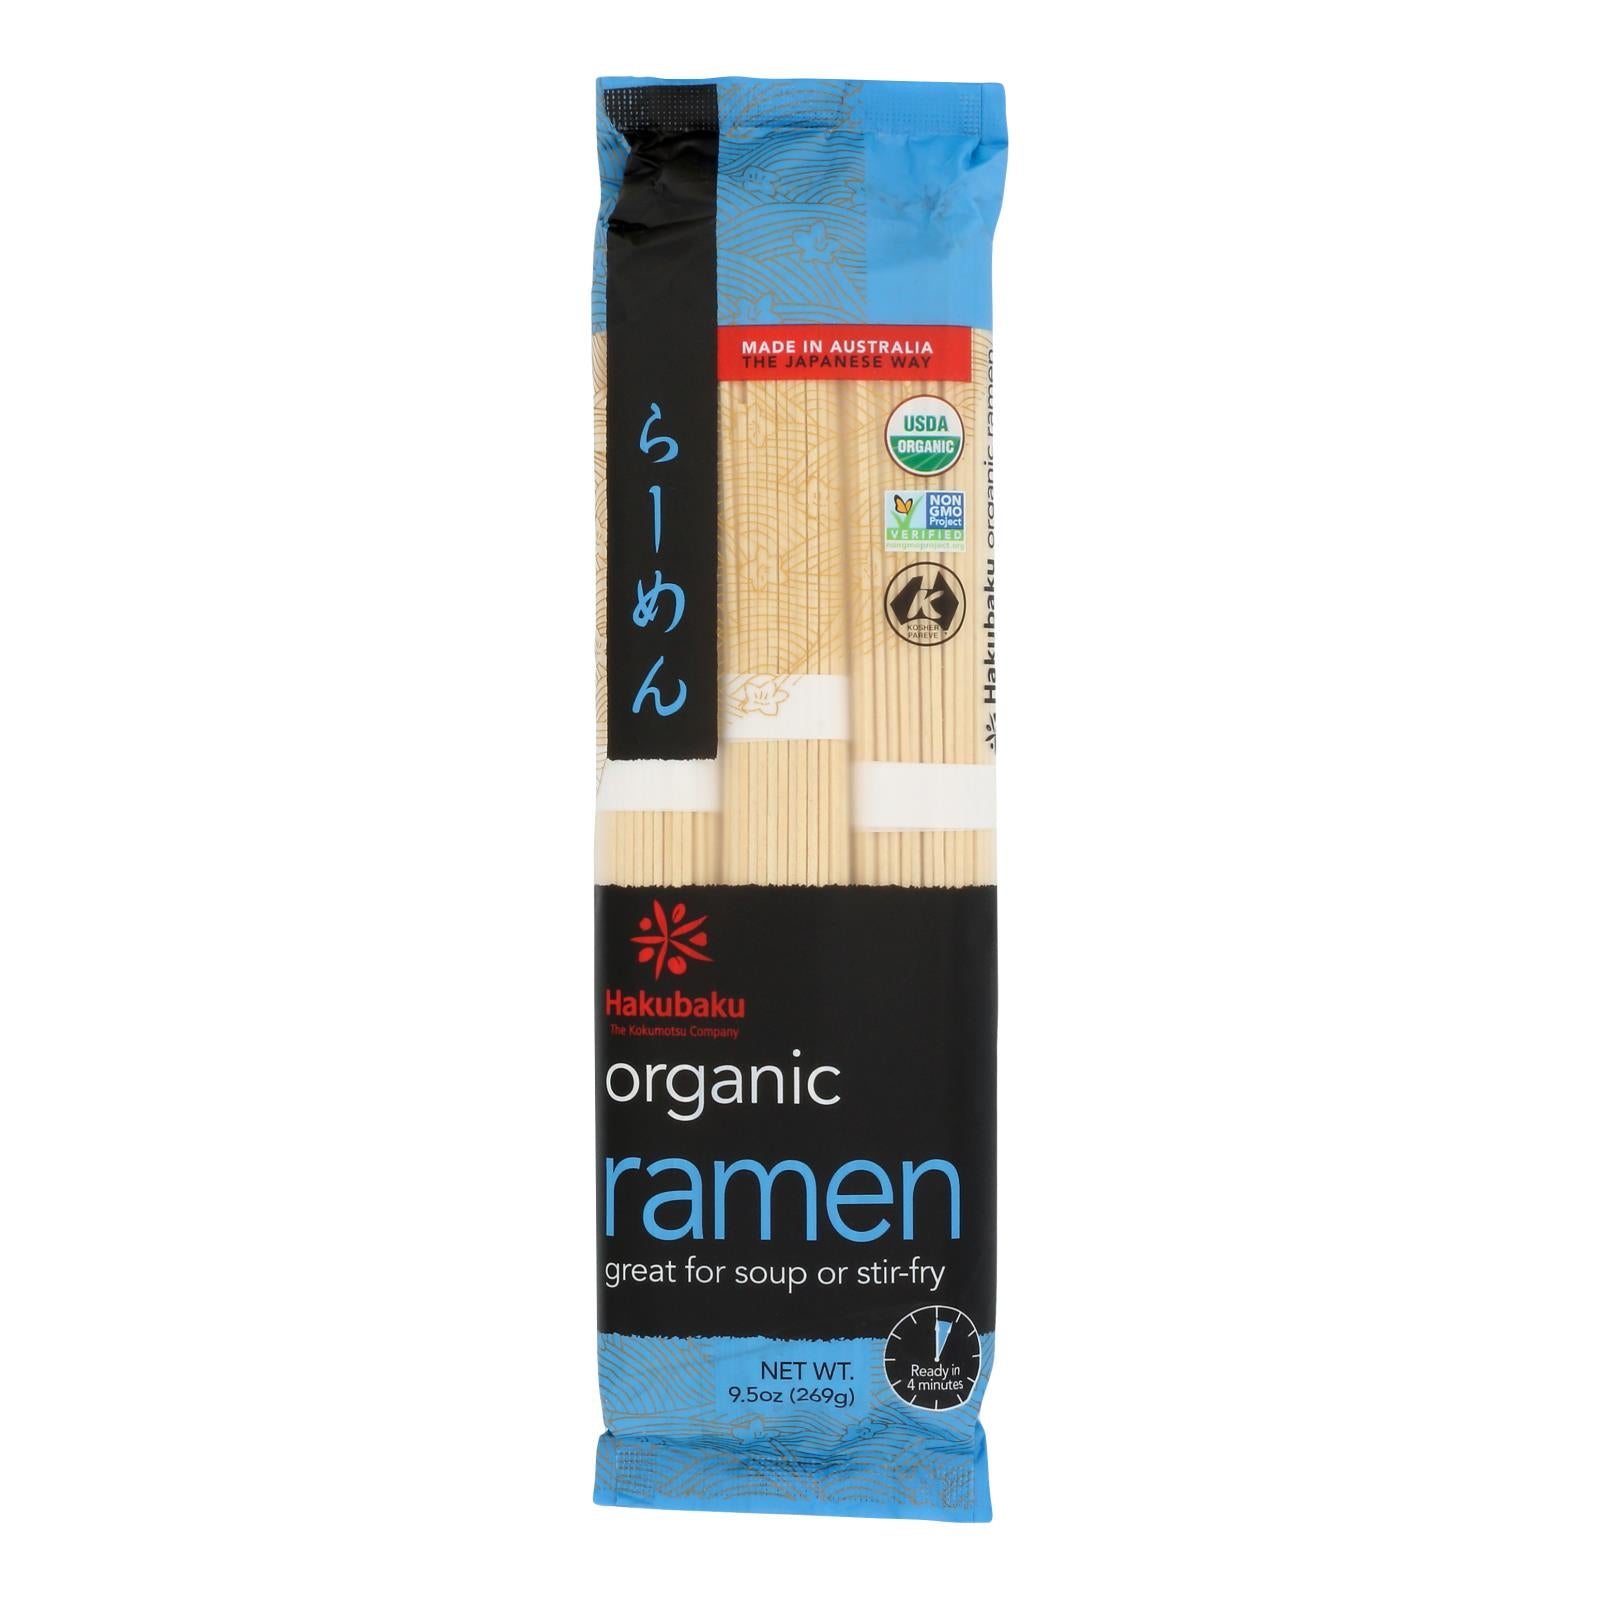 Hakubaku Organic Noodles - Ramen - Case Of 8 - 9.52 Oz